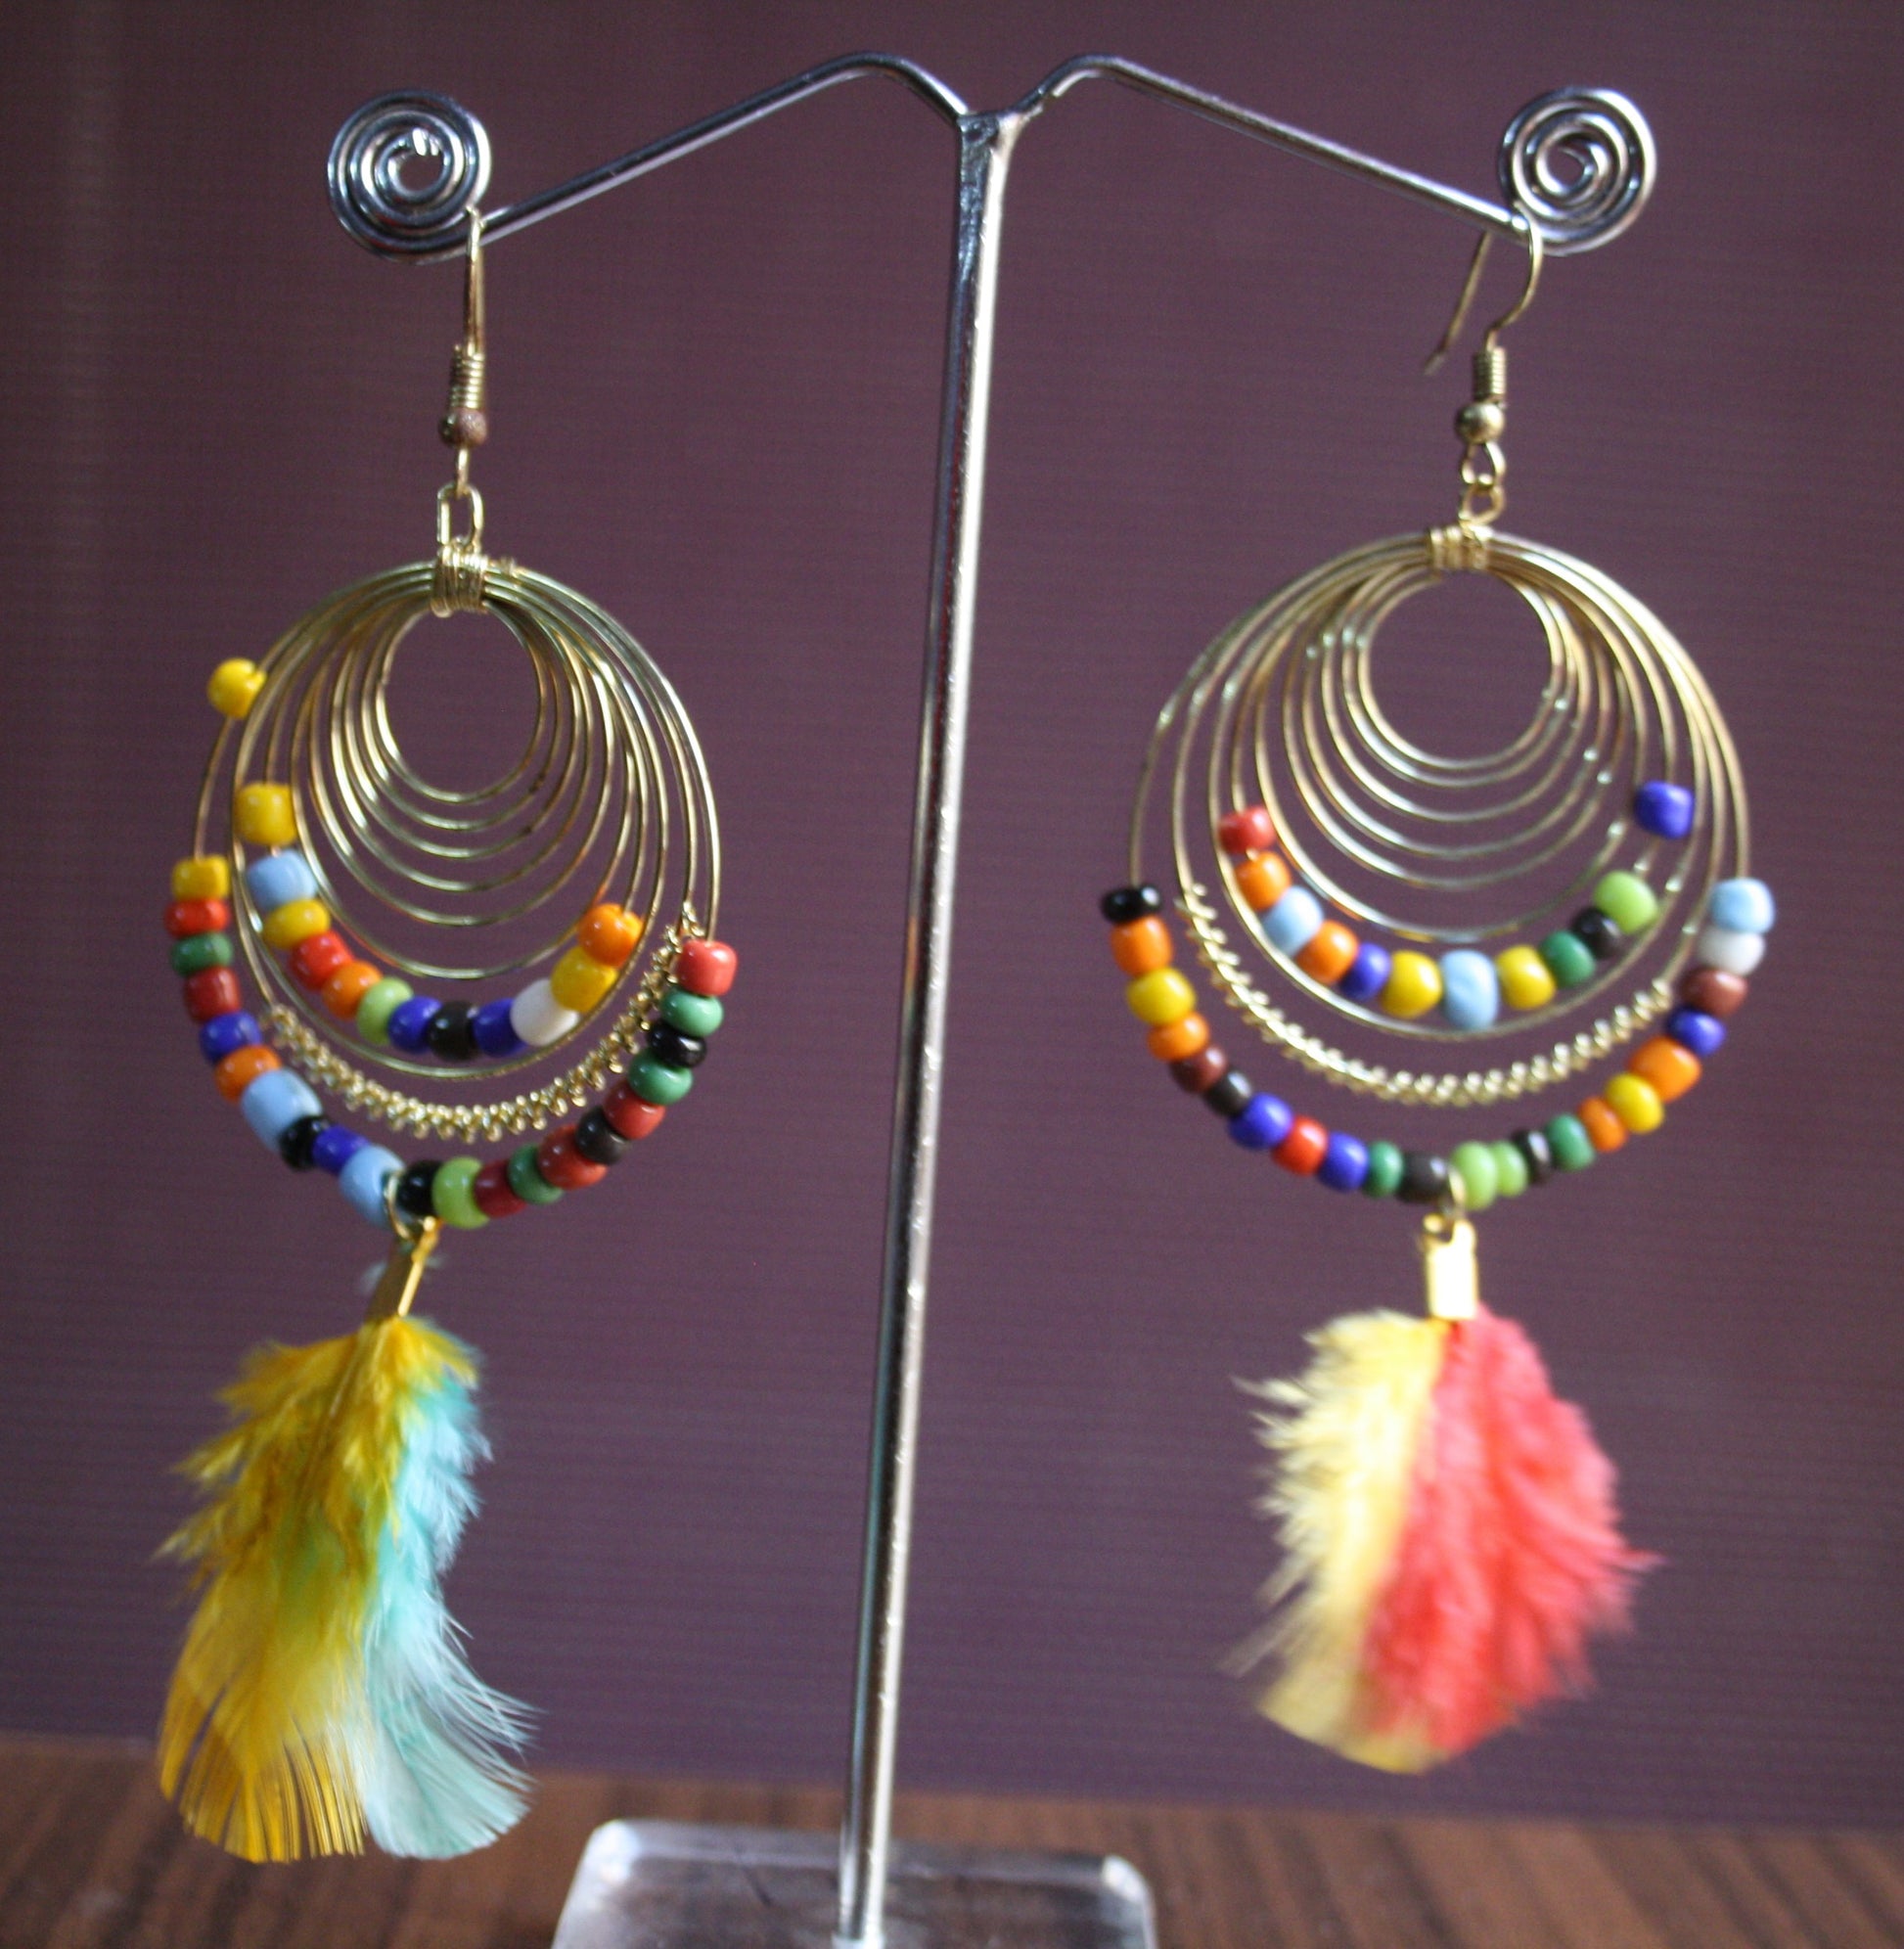 Stylish Feather Tassel Dangler Earrings with Multicolored Beads - GlitterGleam